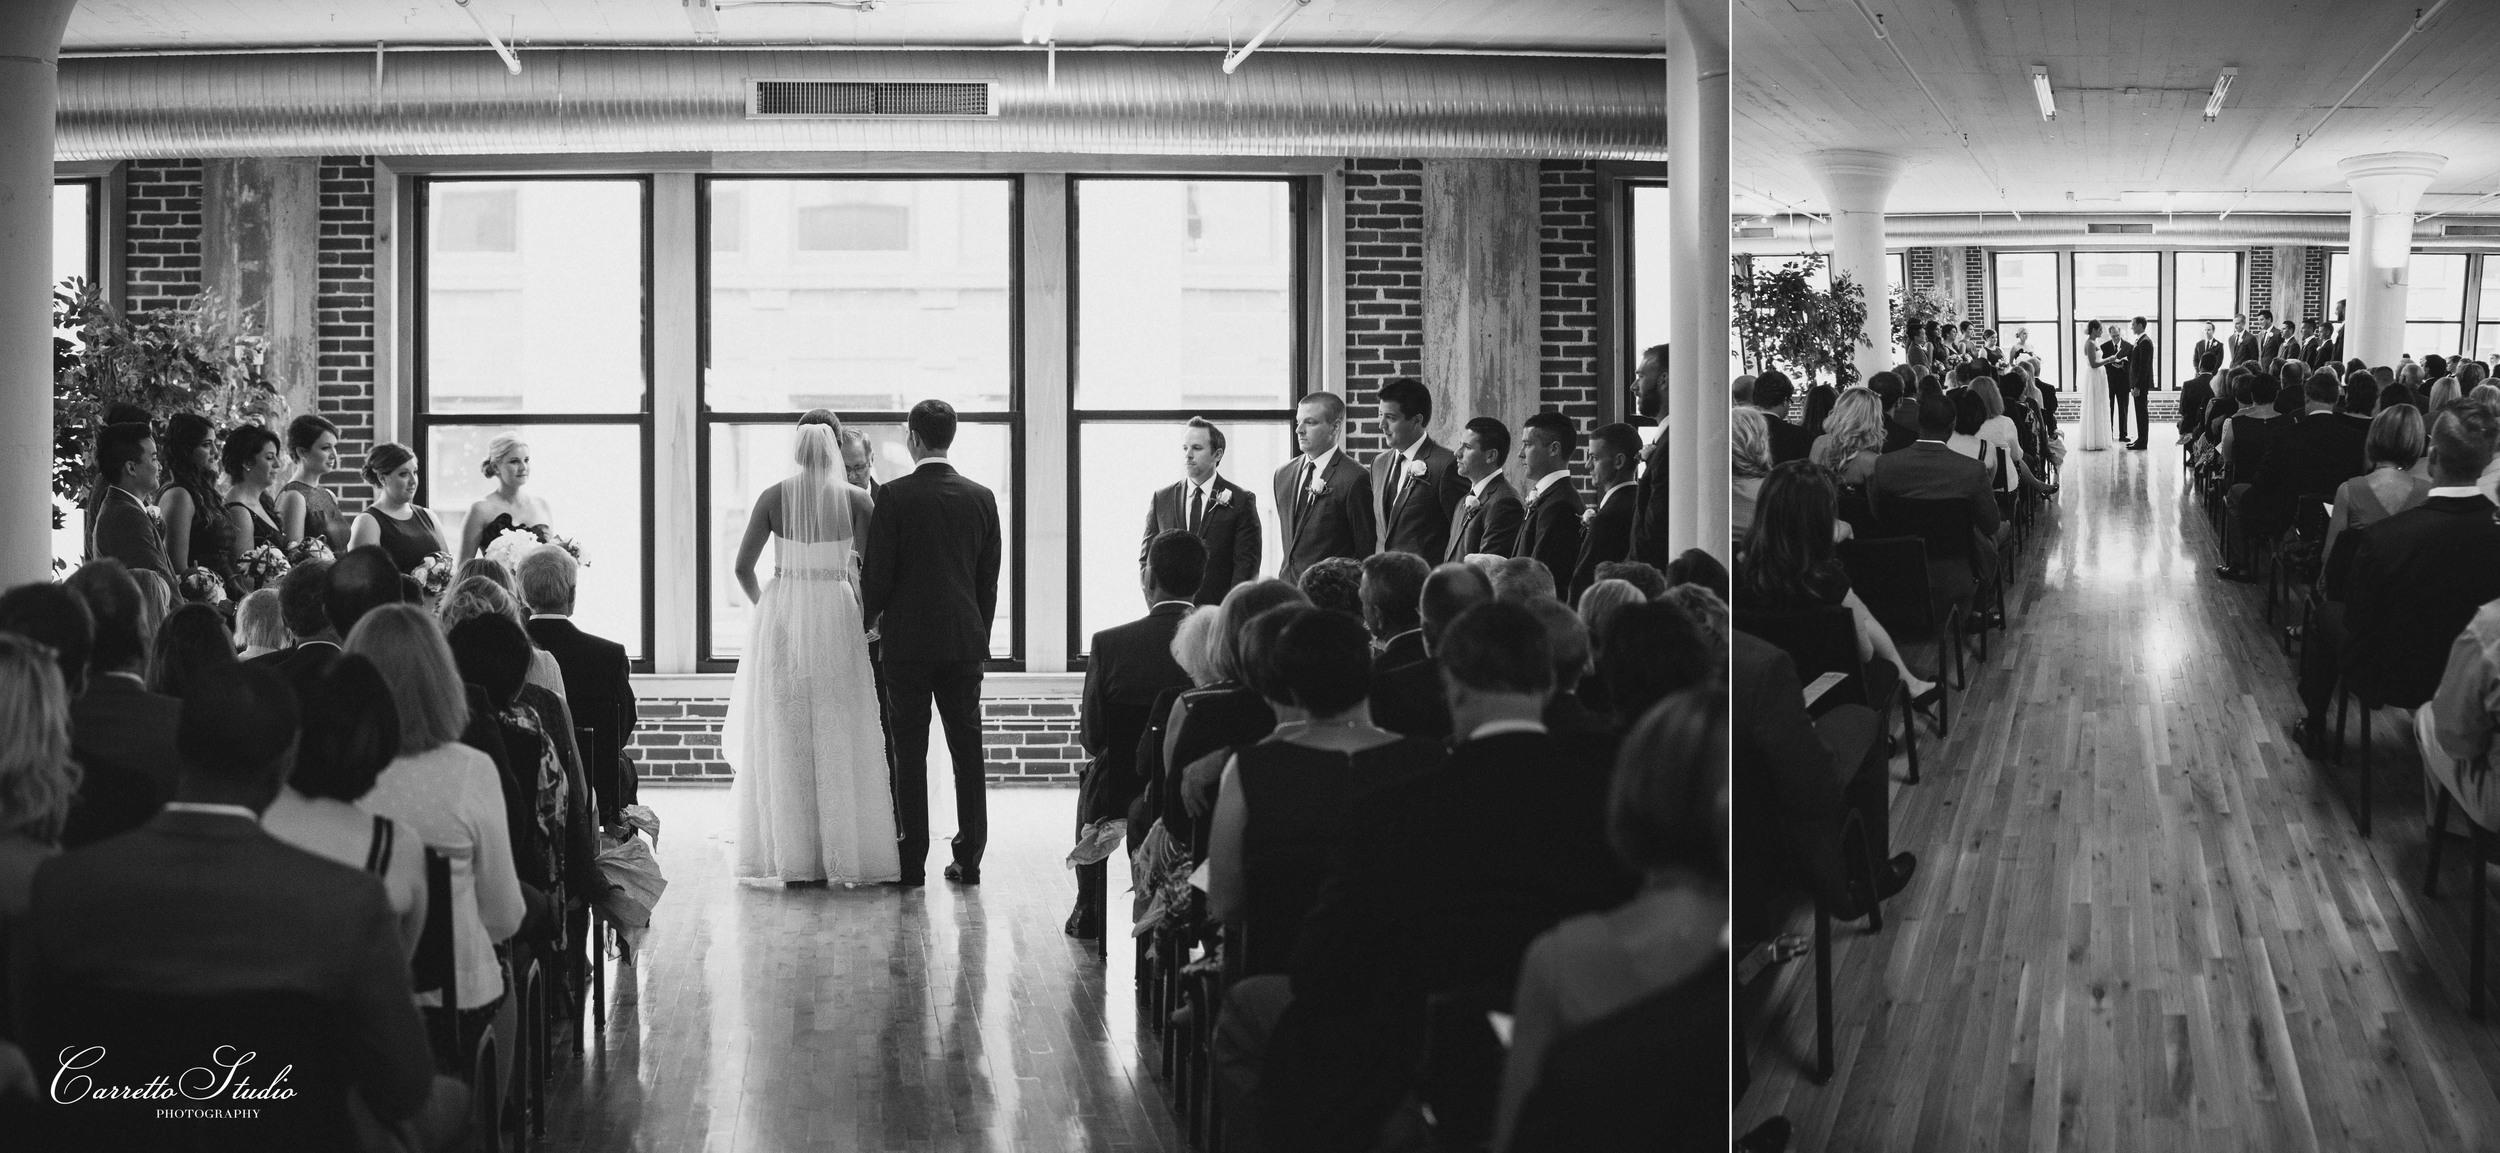 St Louis Wedding Photography-1048.jpg